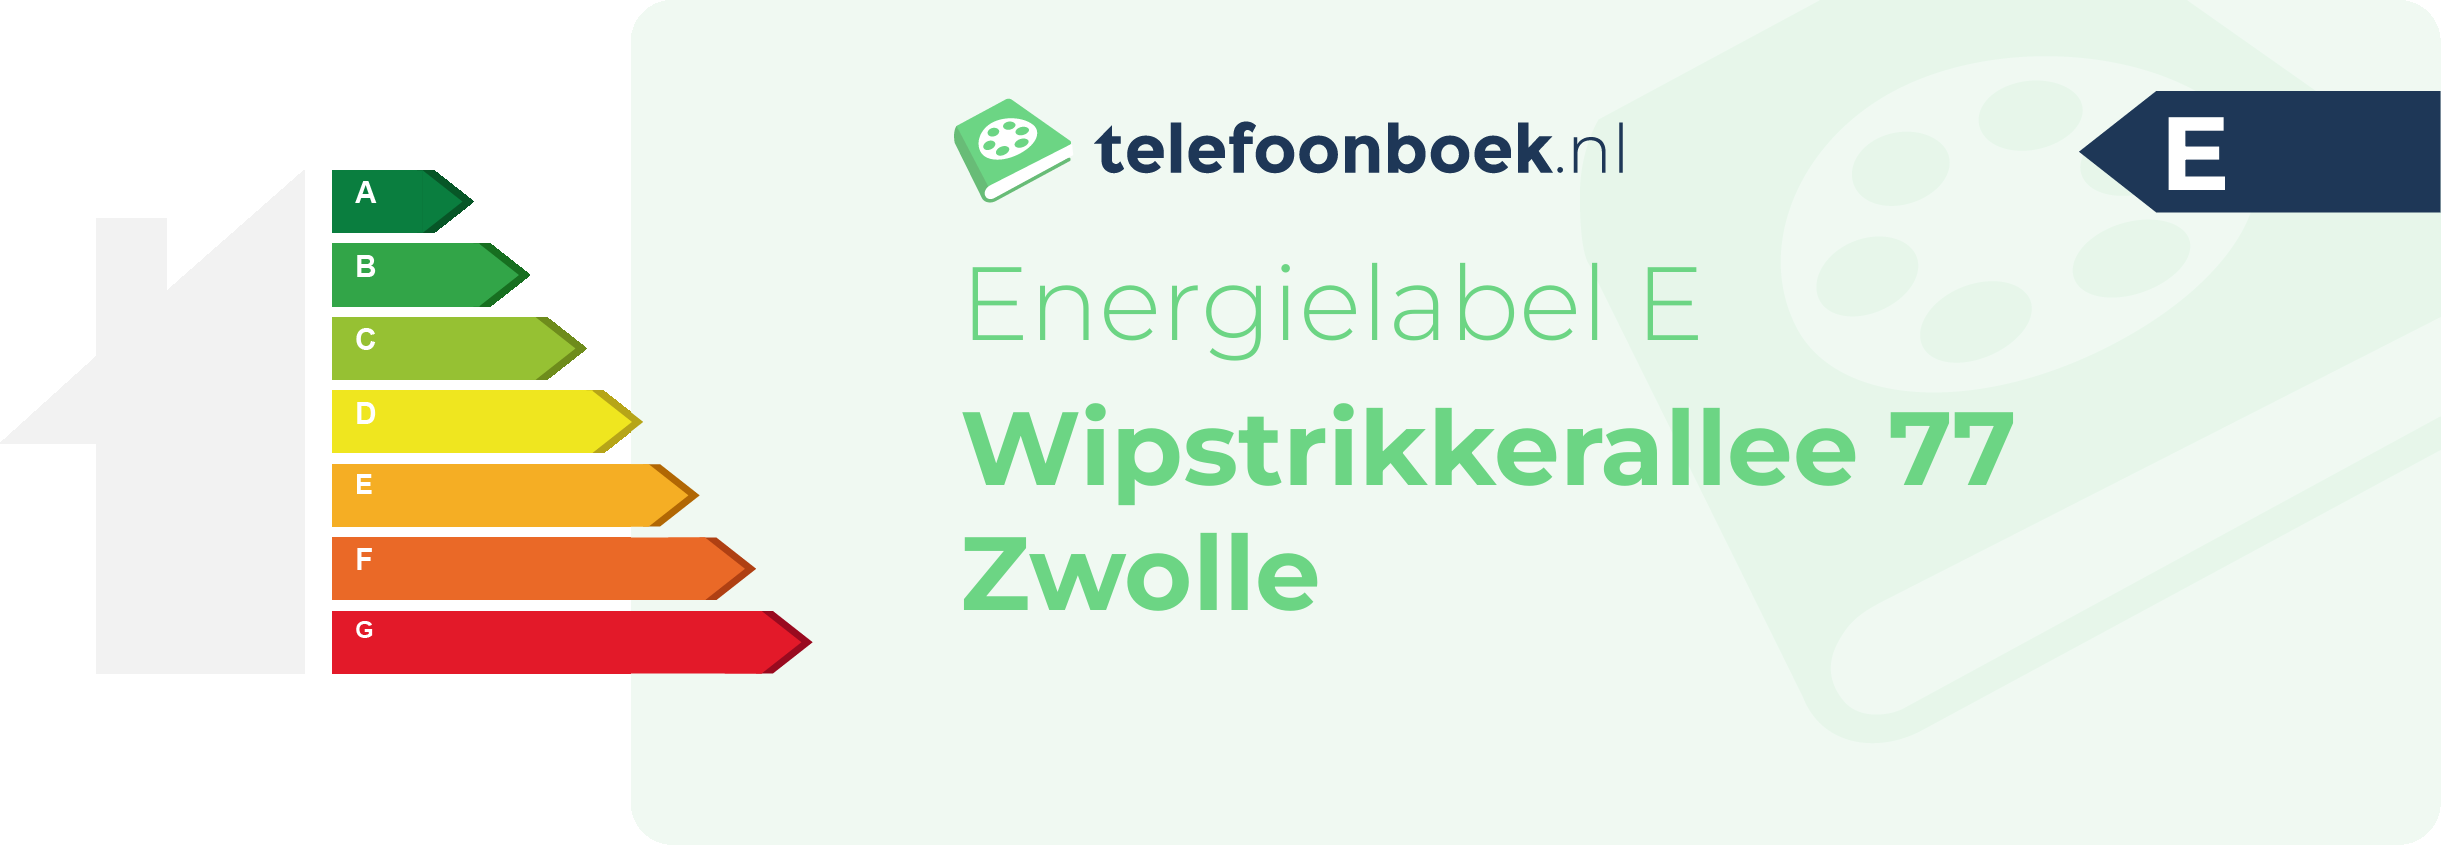 Energielabel Wipstrikkerallee 77 Zwolle